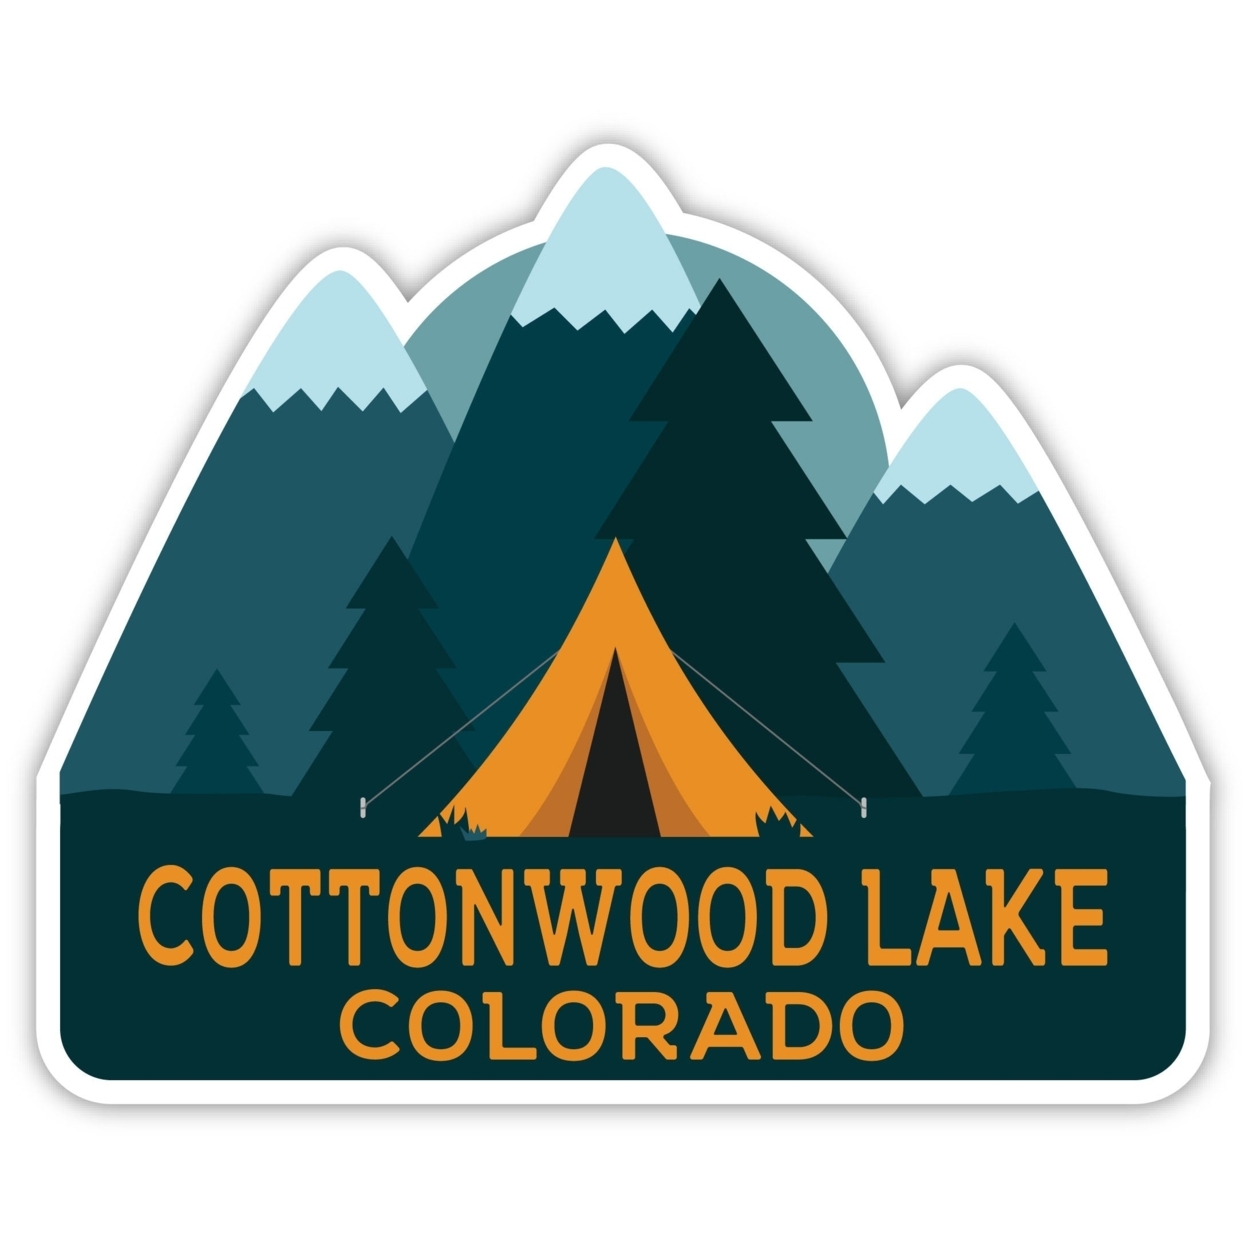 Cottonwood Lake Colorado Souvenir Decorative Stickers (Choose Theme And Size) - Single Unit, 12-Inch, Tent